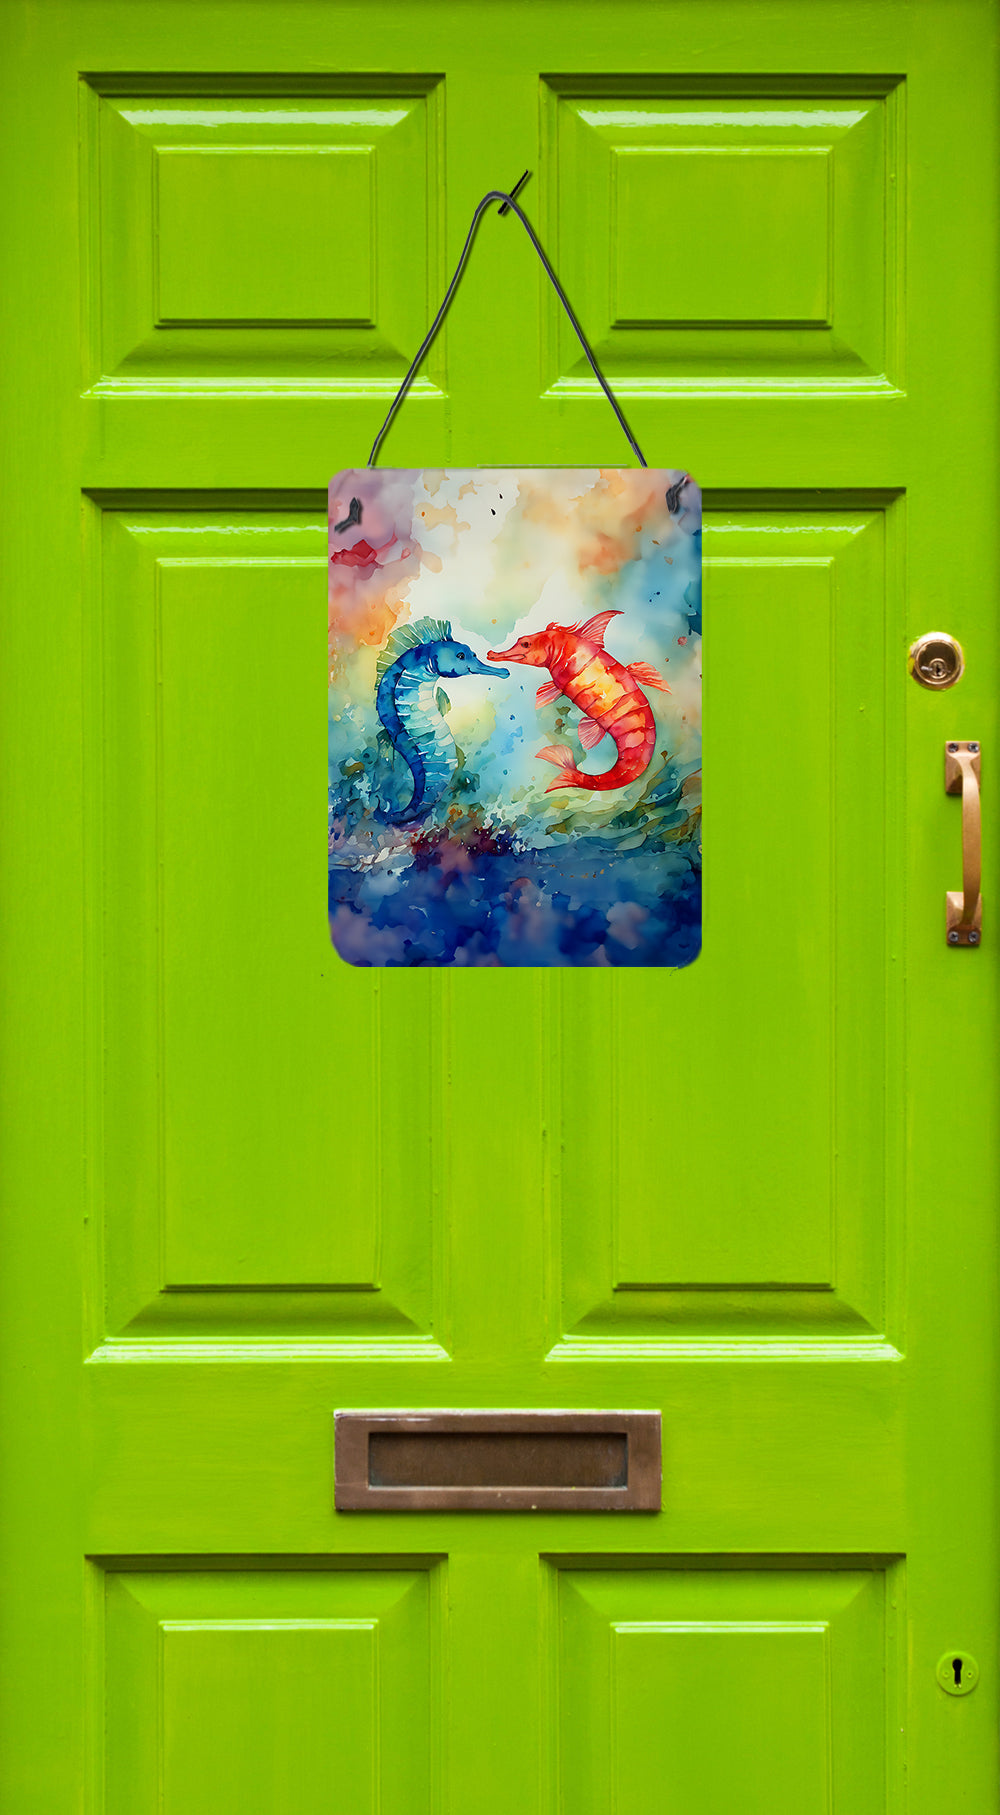 Buy this Seahorses Wall or Door Hanging Prints